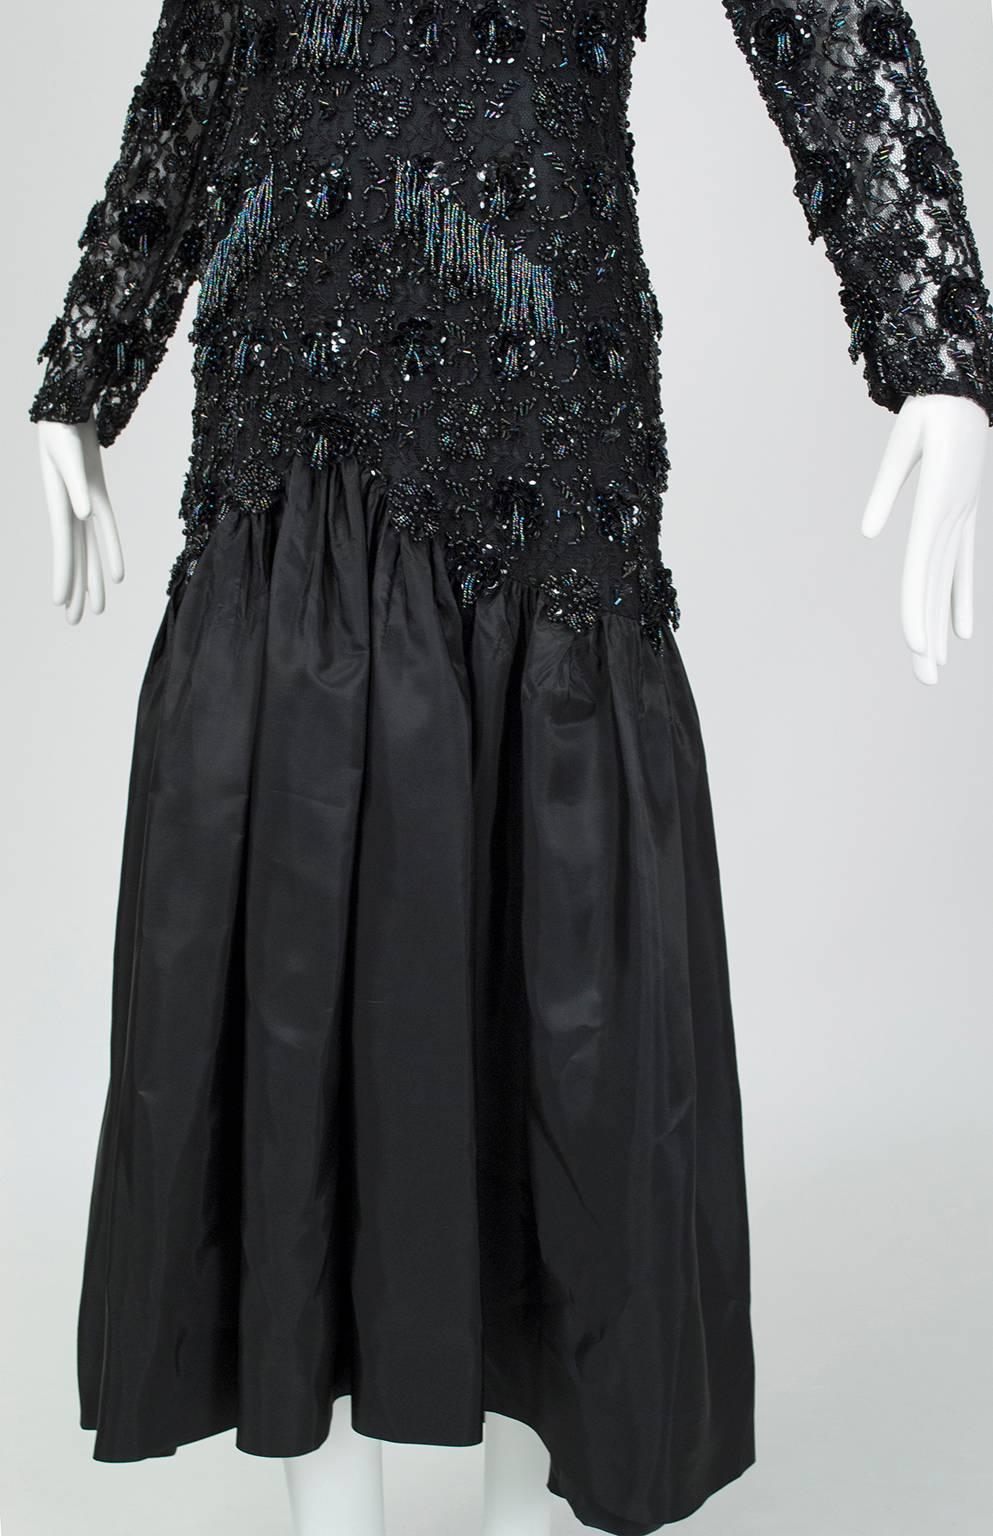 Women's Oleg Cassini Glam Black Beaded Illusion Power Gown with Trumpet Skirt - S, 1980s For Sale